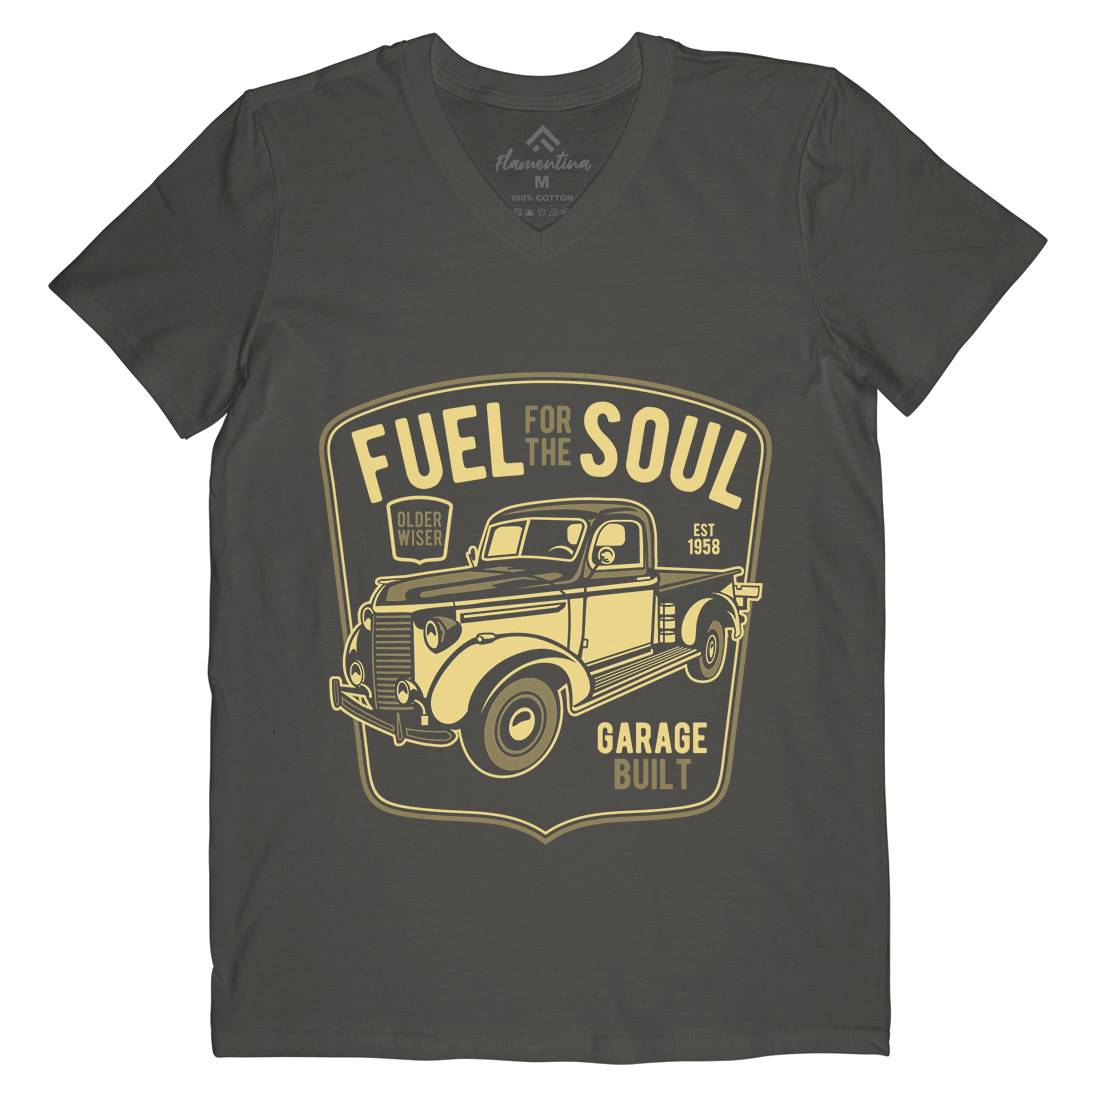 Fuel For The Soul Mens V-Neck T-Shirt Cars B213